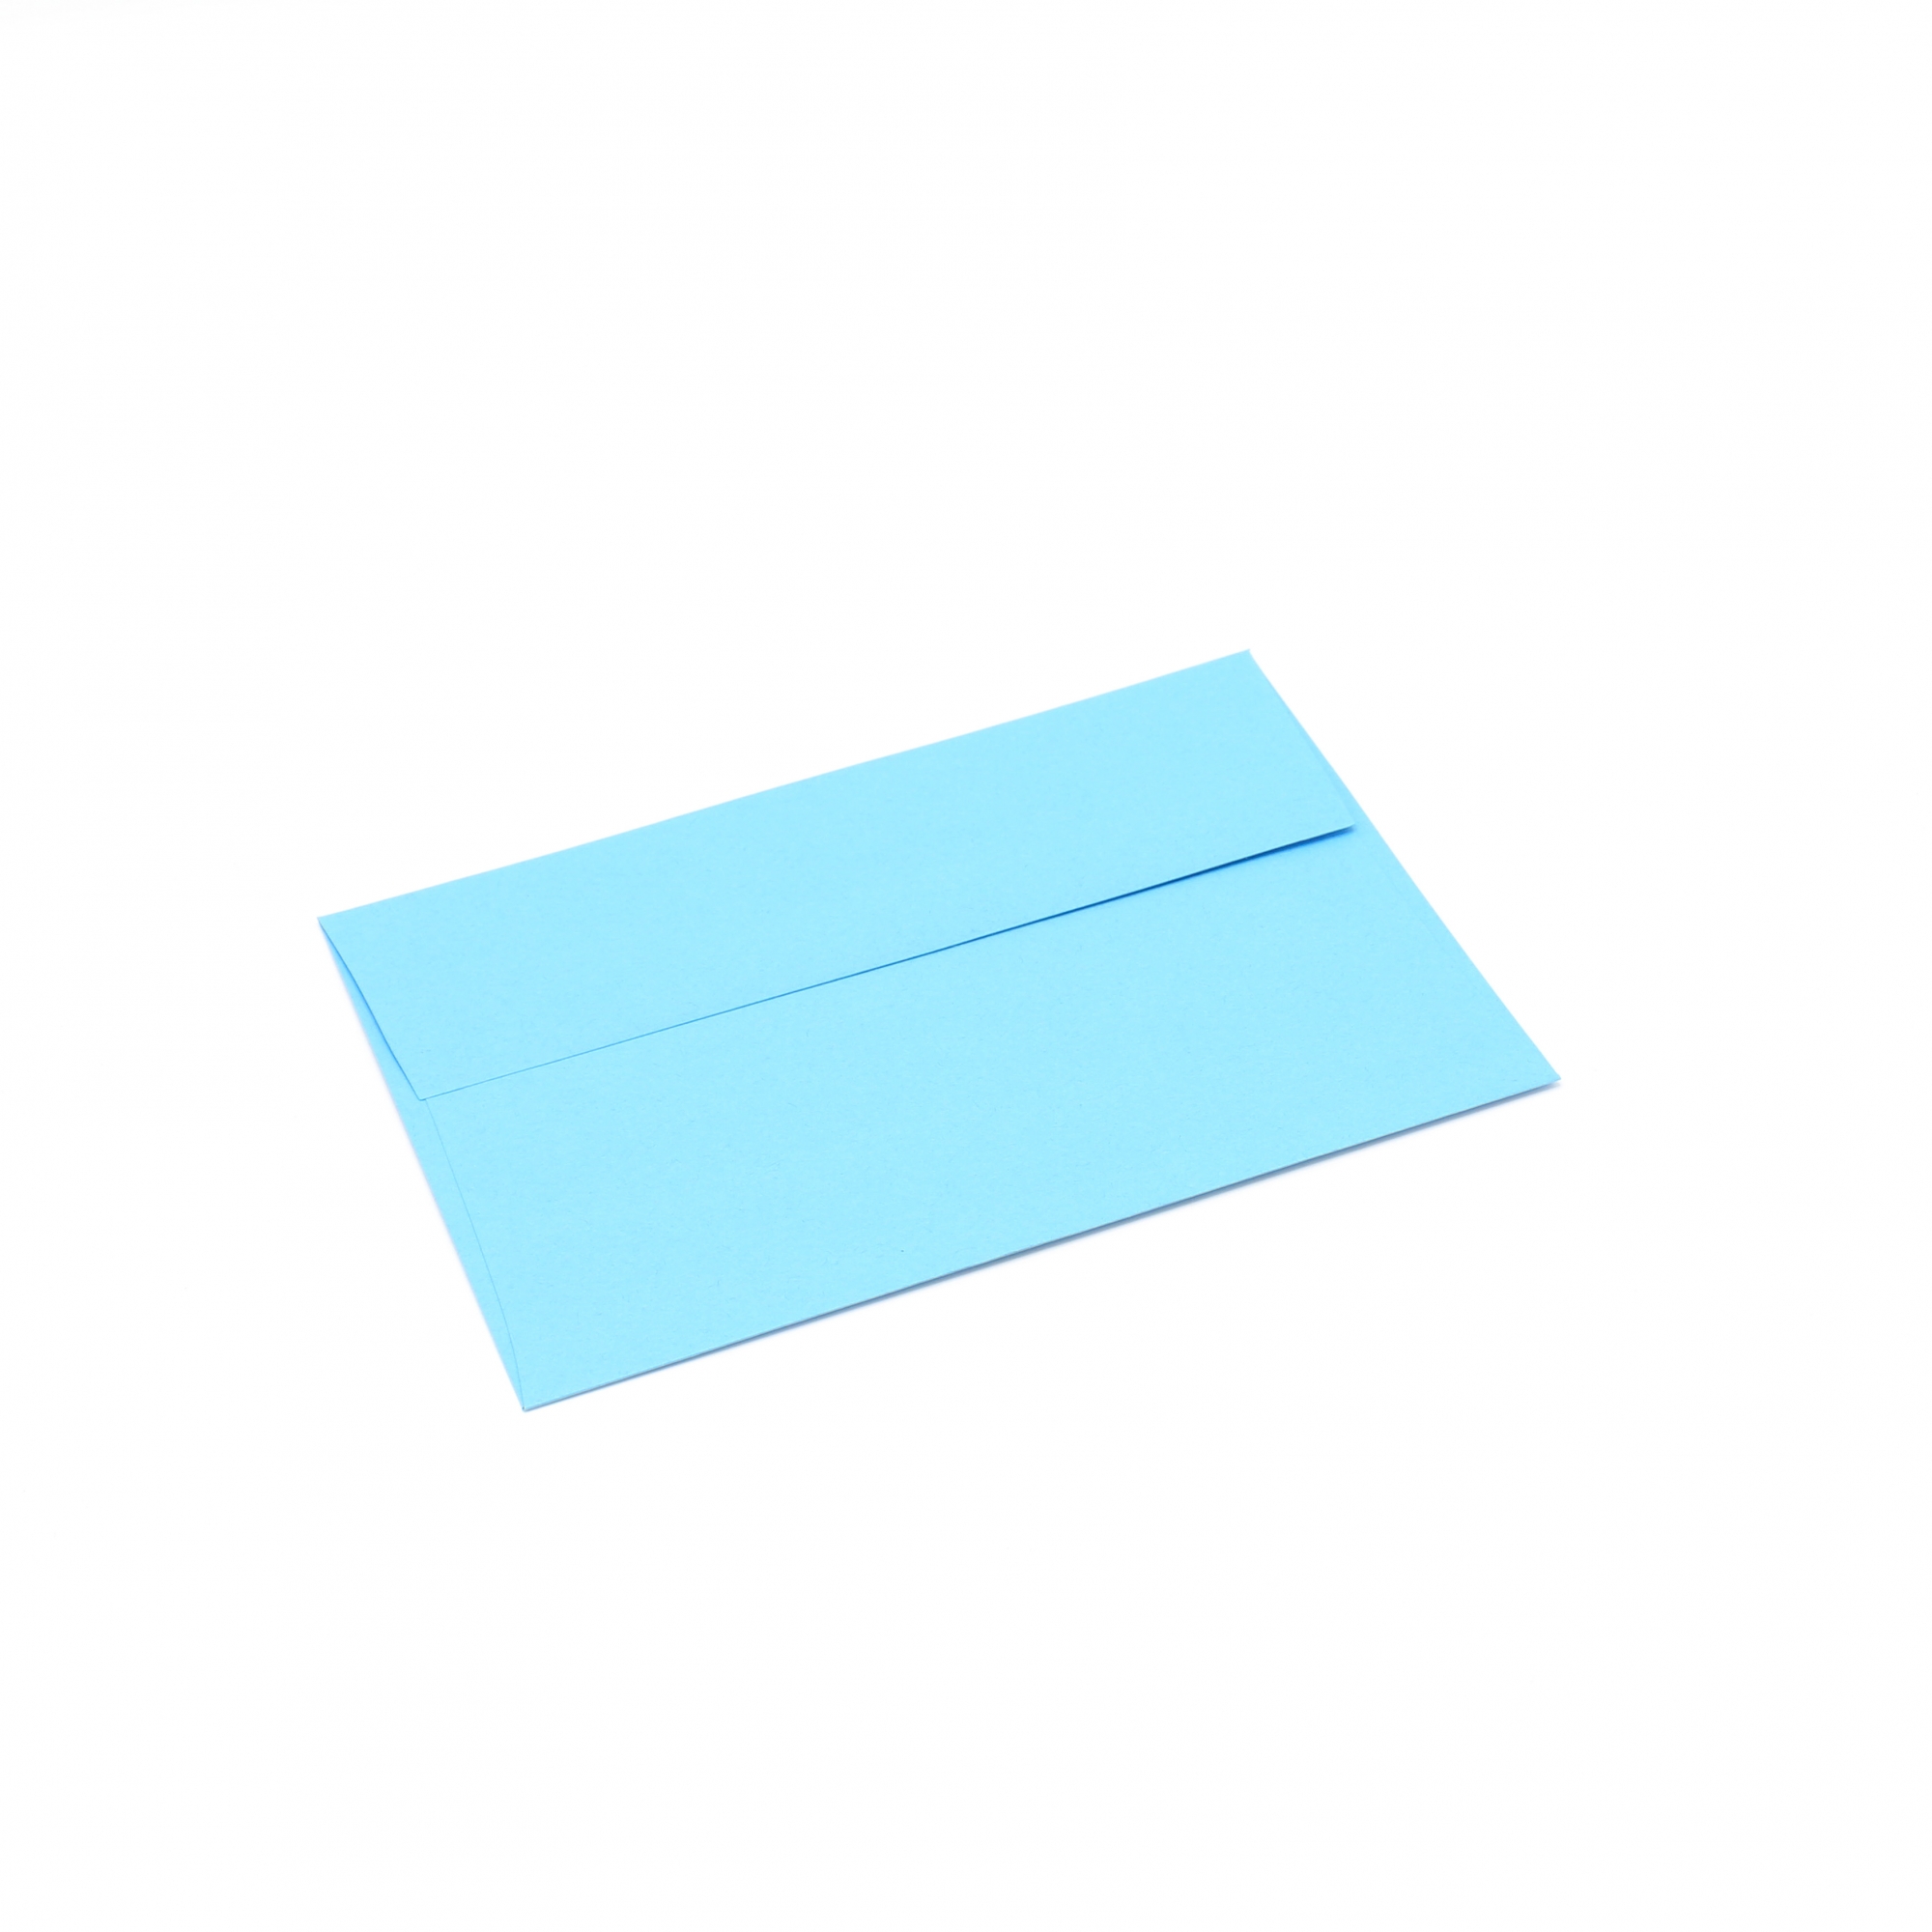 Astrobright Celestial Blue 8-1/2x11 24lb 500/pkg, Paper, Envelopes,  Cardstock & Wide format, Quick shipping nationwide